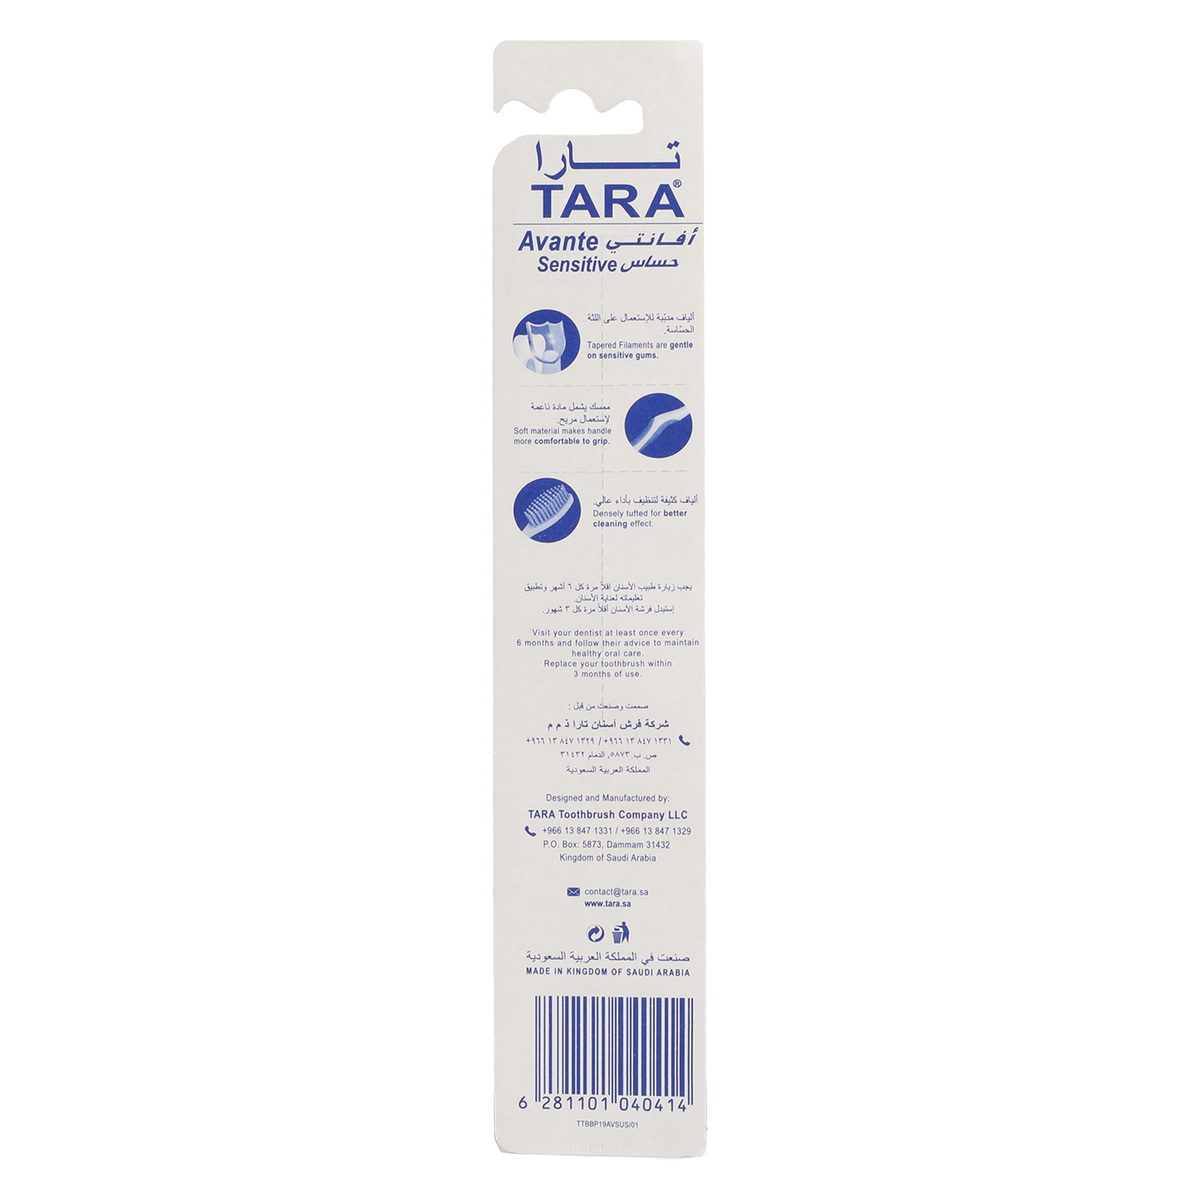 Tara Avante Ultra Soft Toothbrush 1 pc